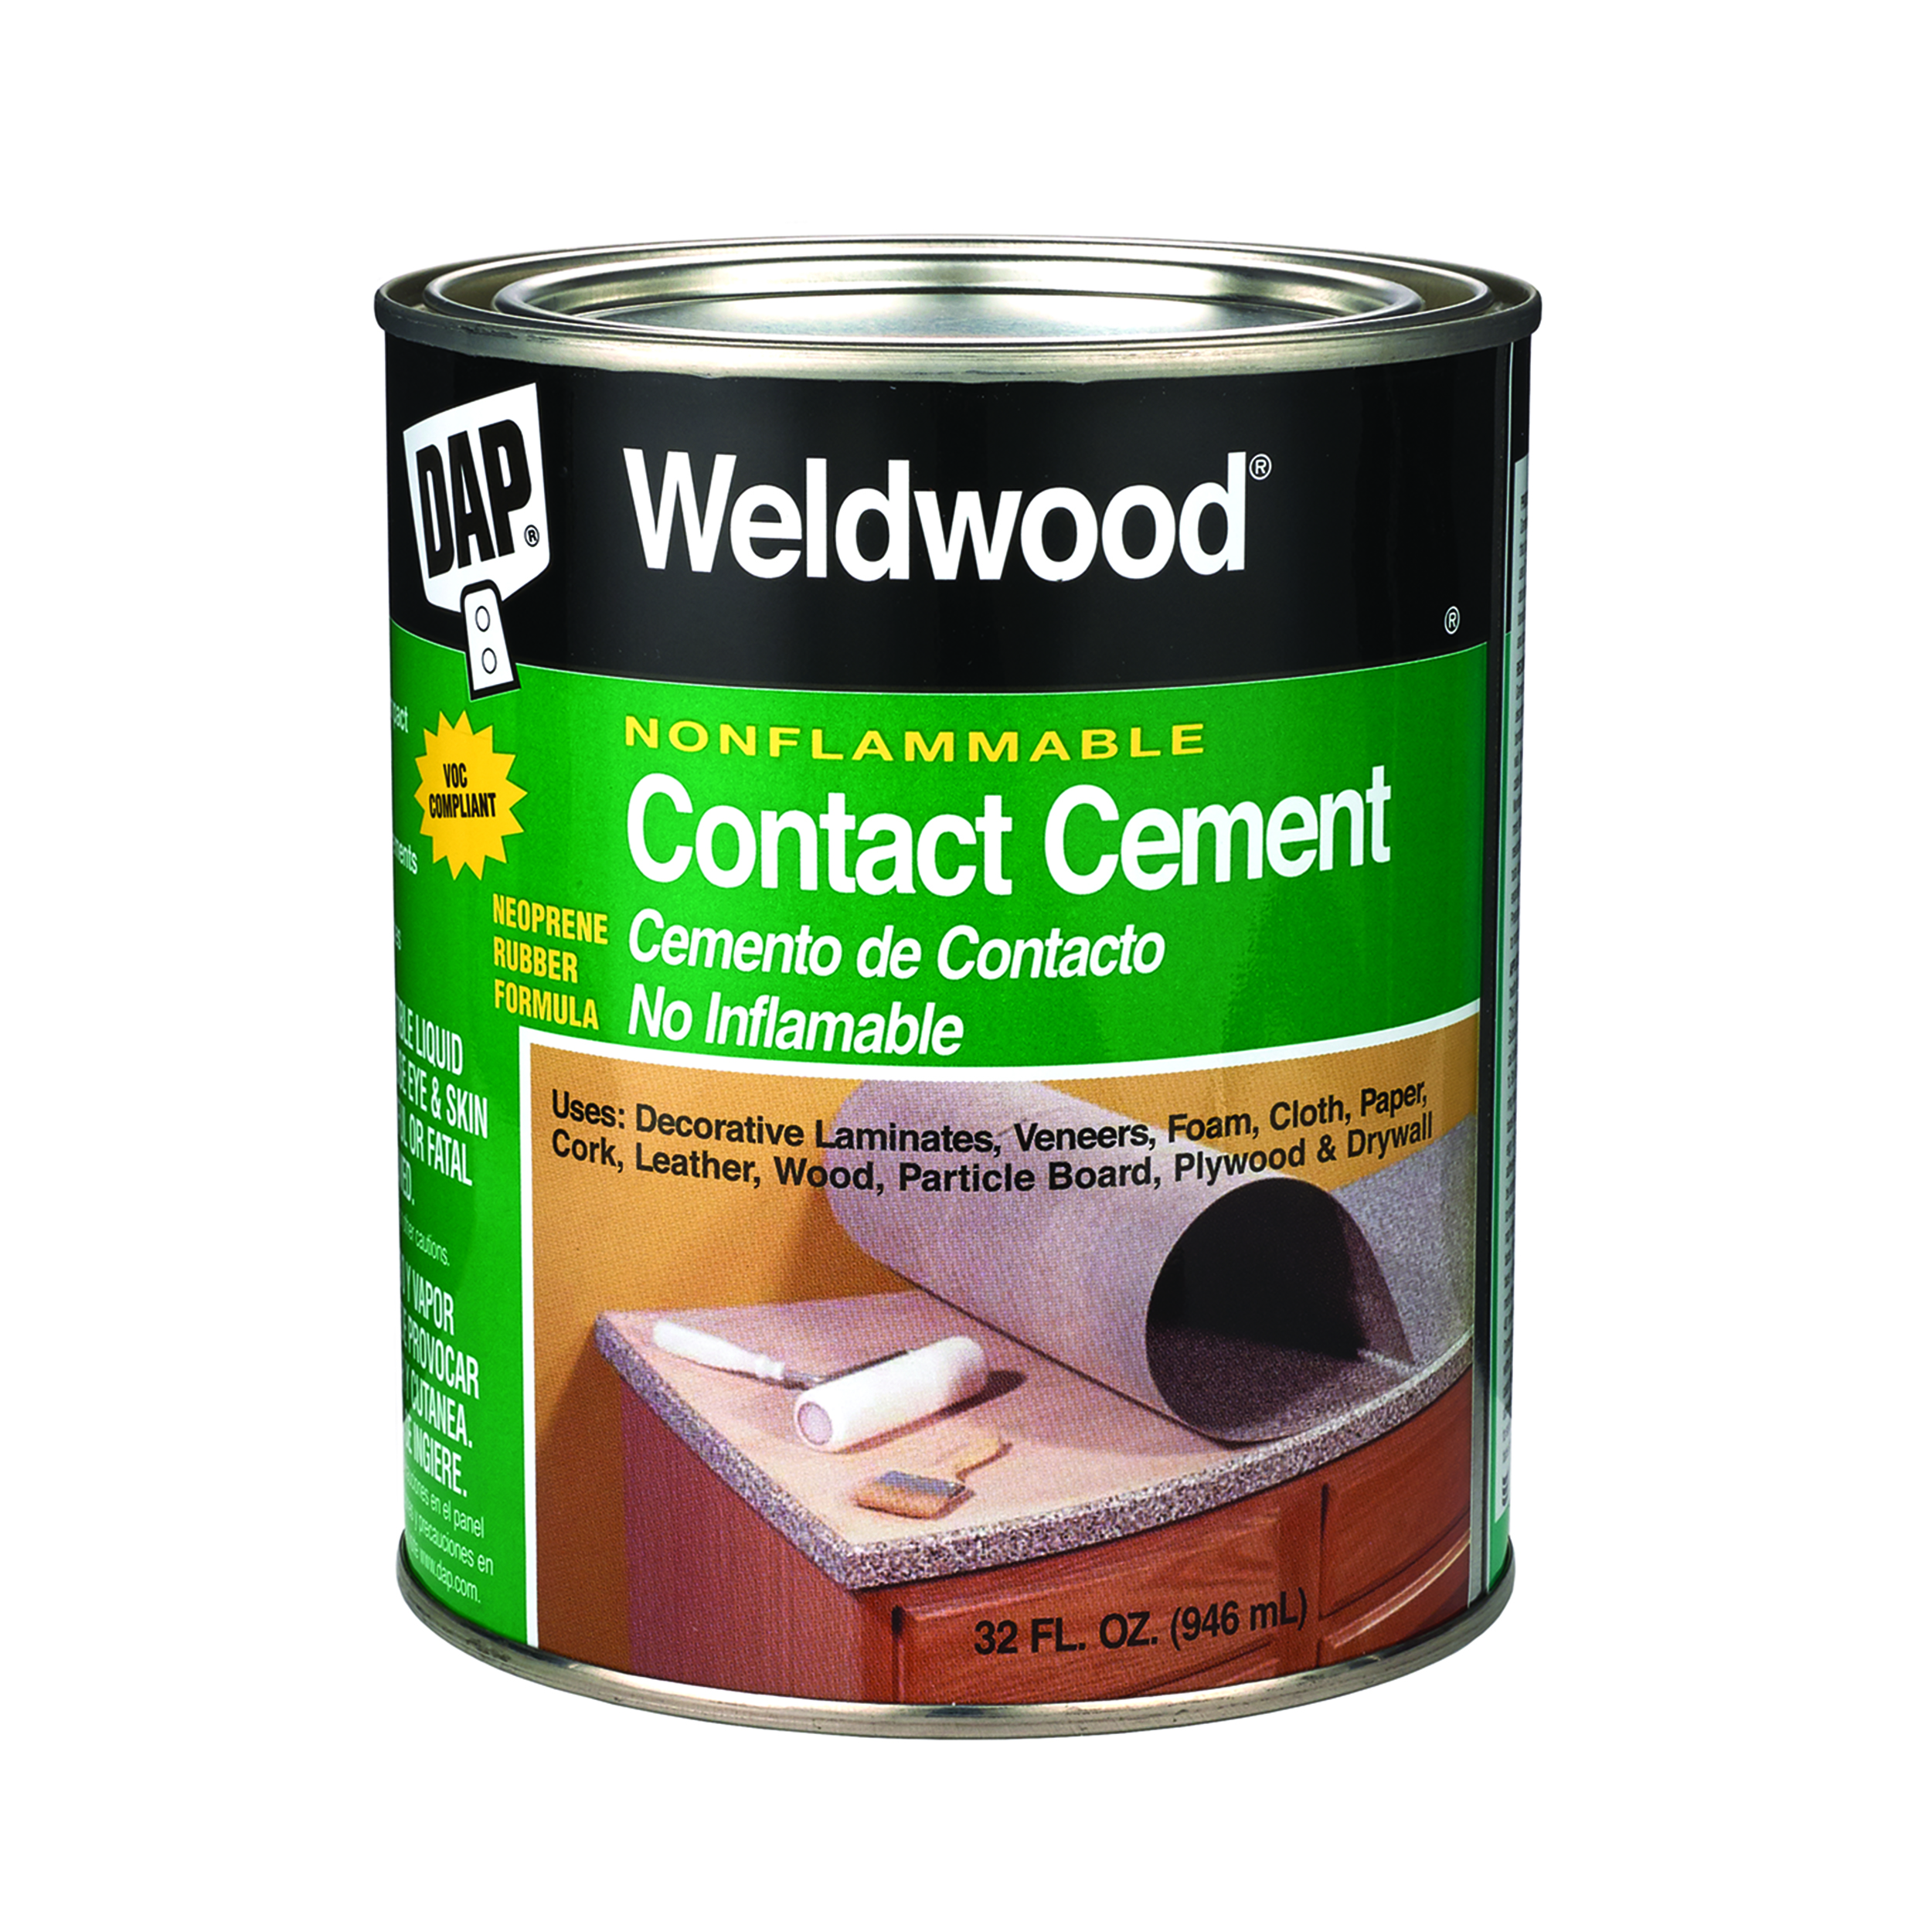 Dap Weldwood Nonflammable Contact Cement Qt